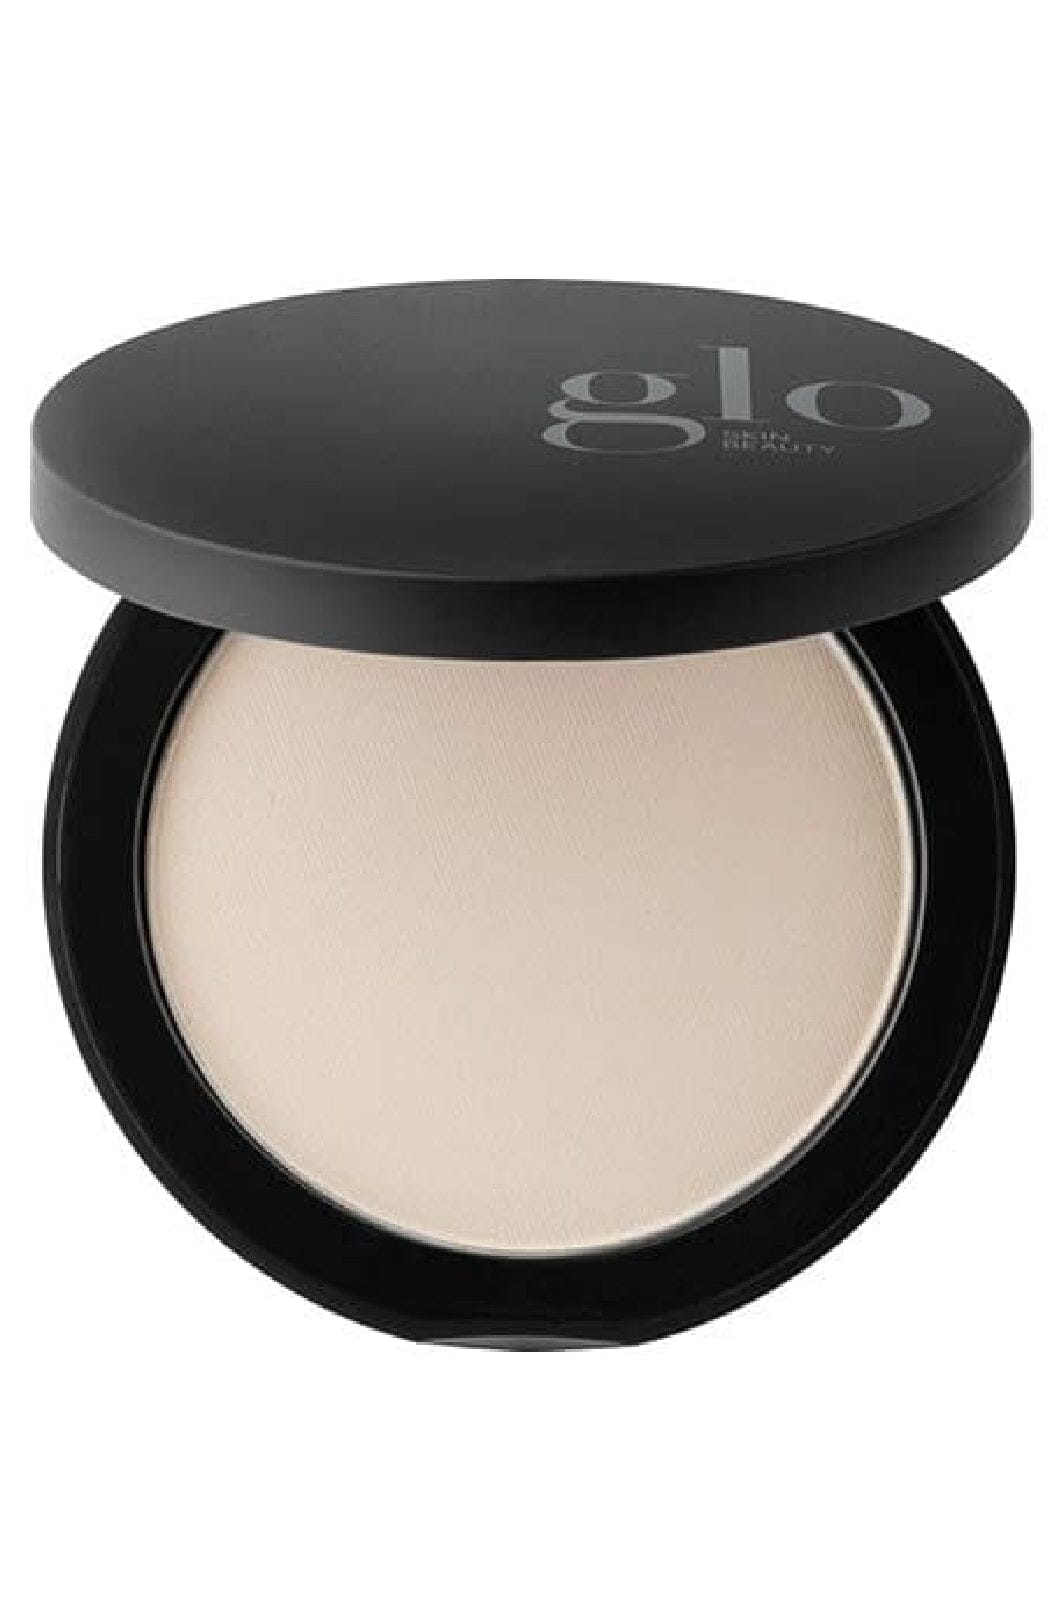 Glo Skin Beauty - Glo Perfecting Powder - Translucent, 9 g Makeup 